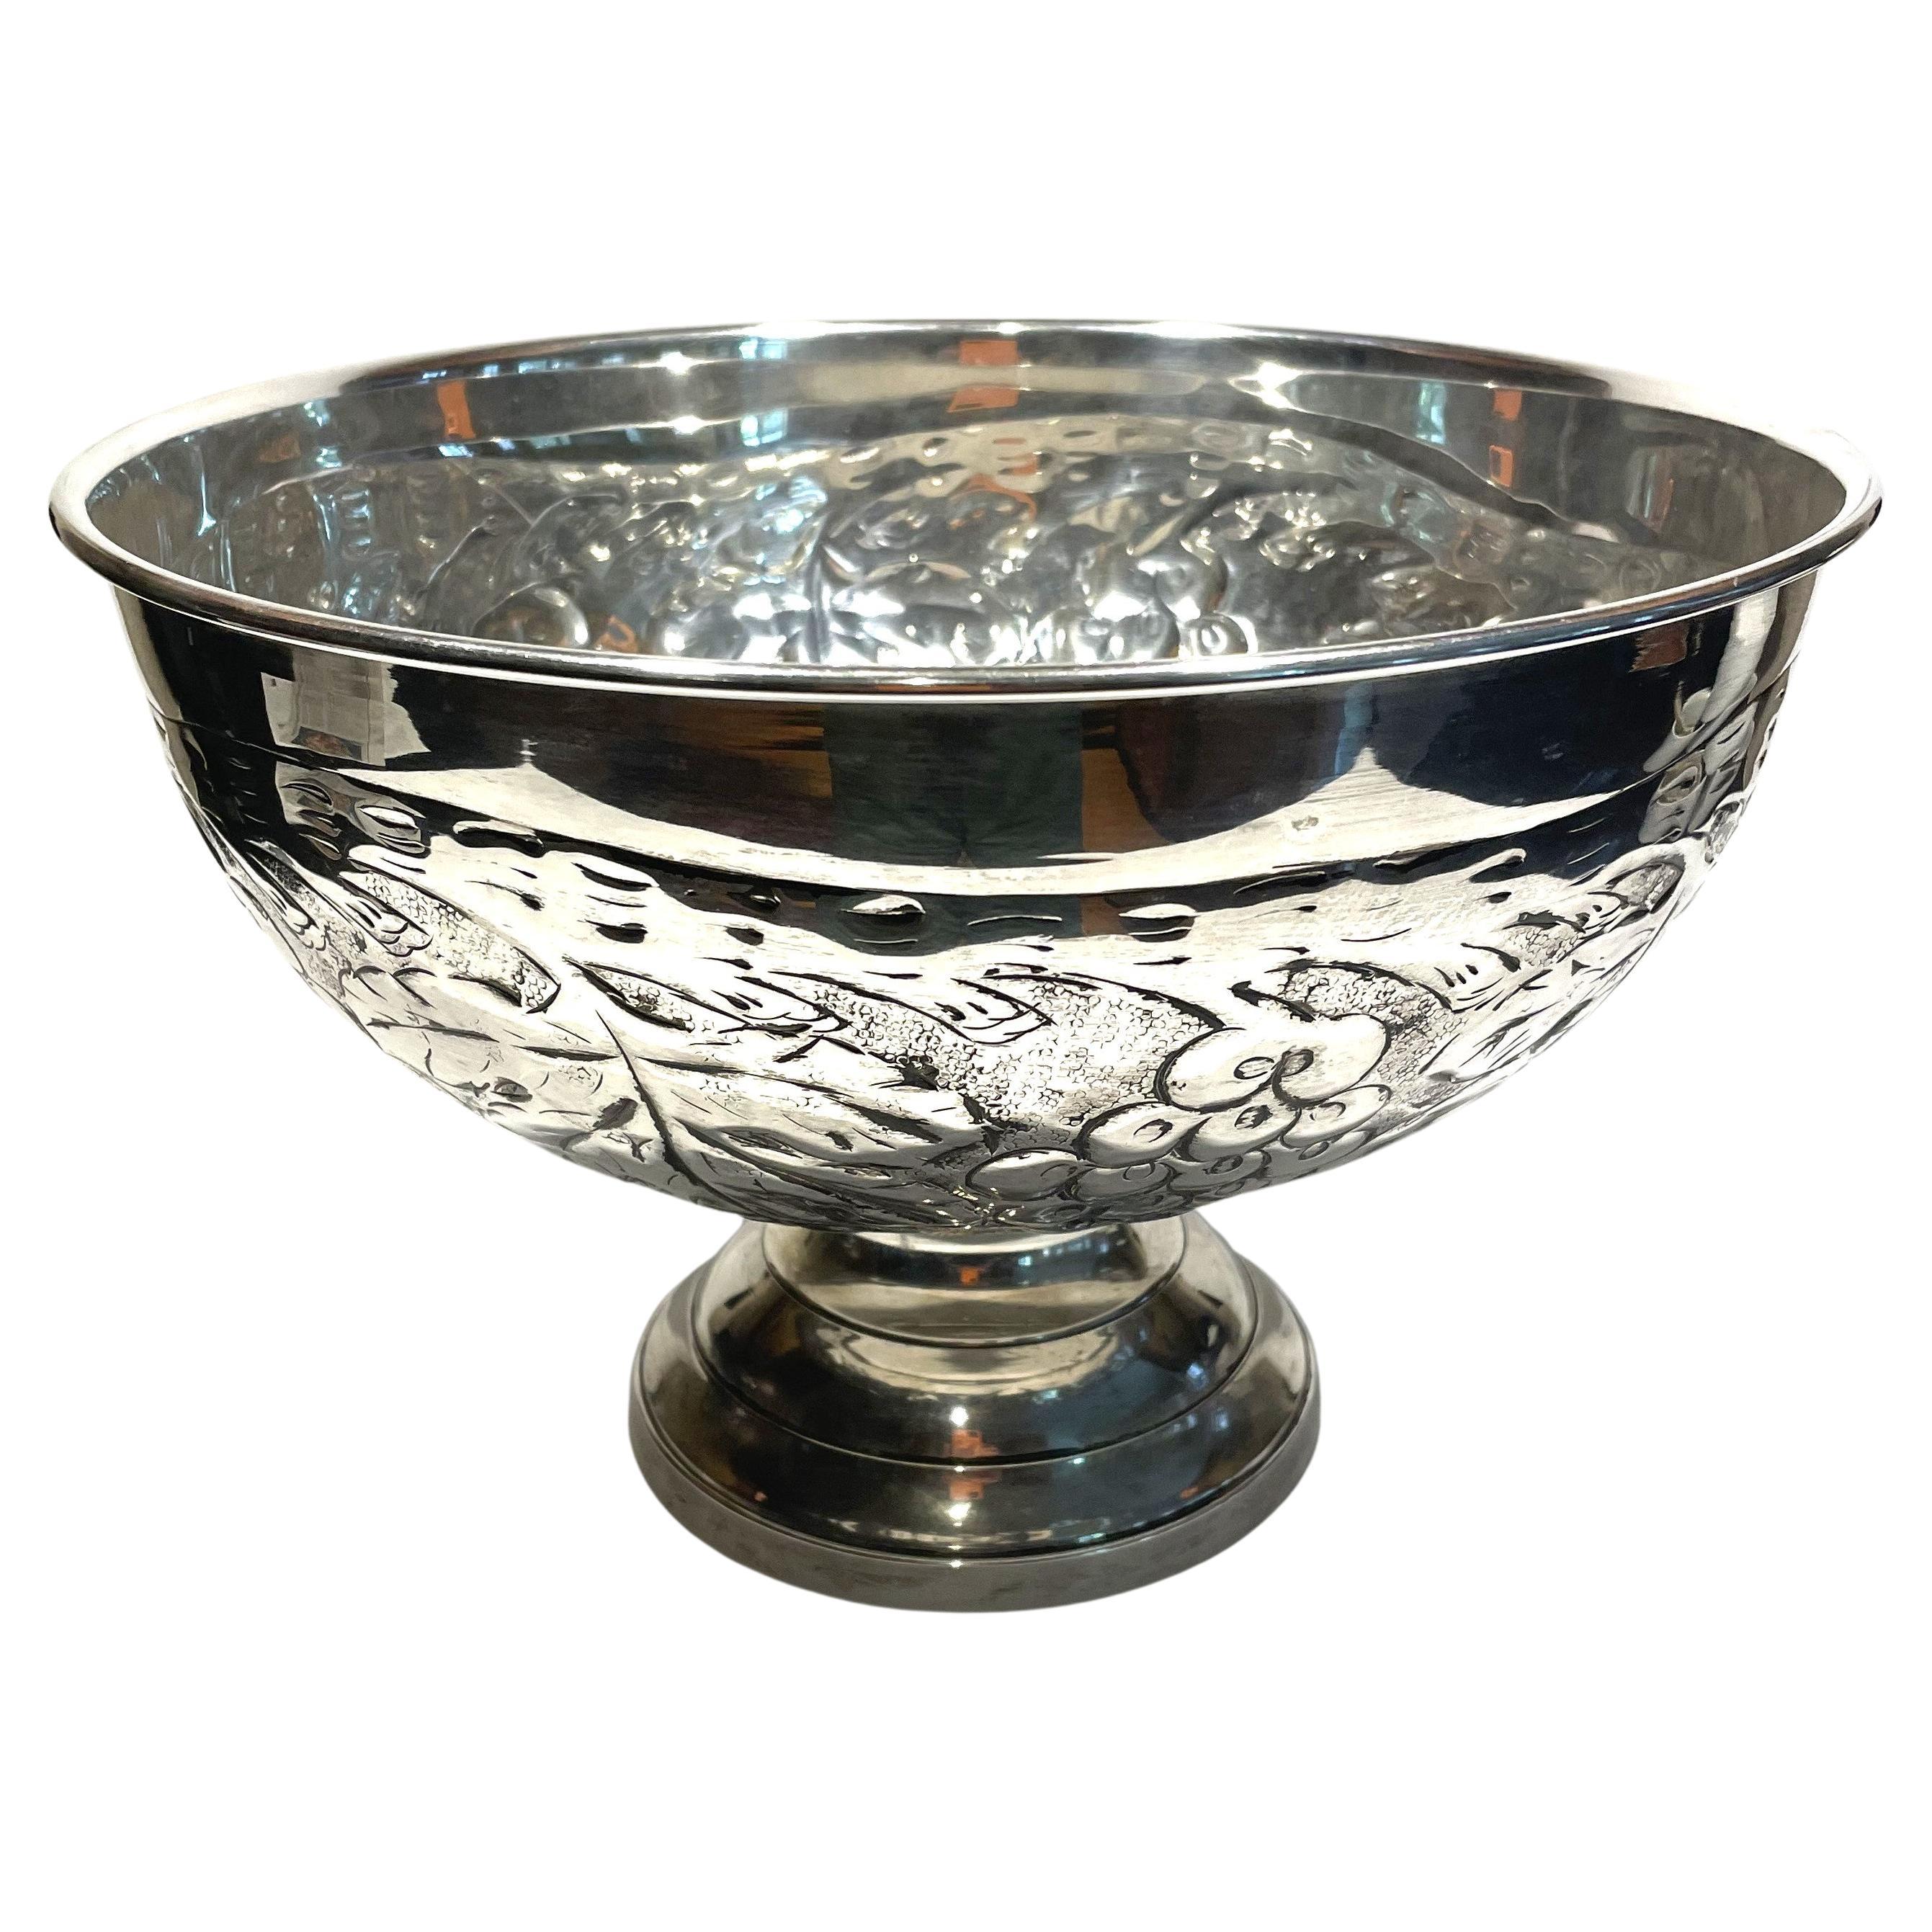 Vintage Artisanal Silver Urn